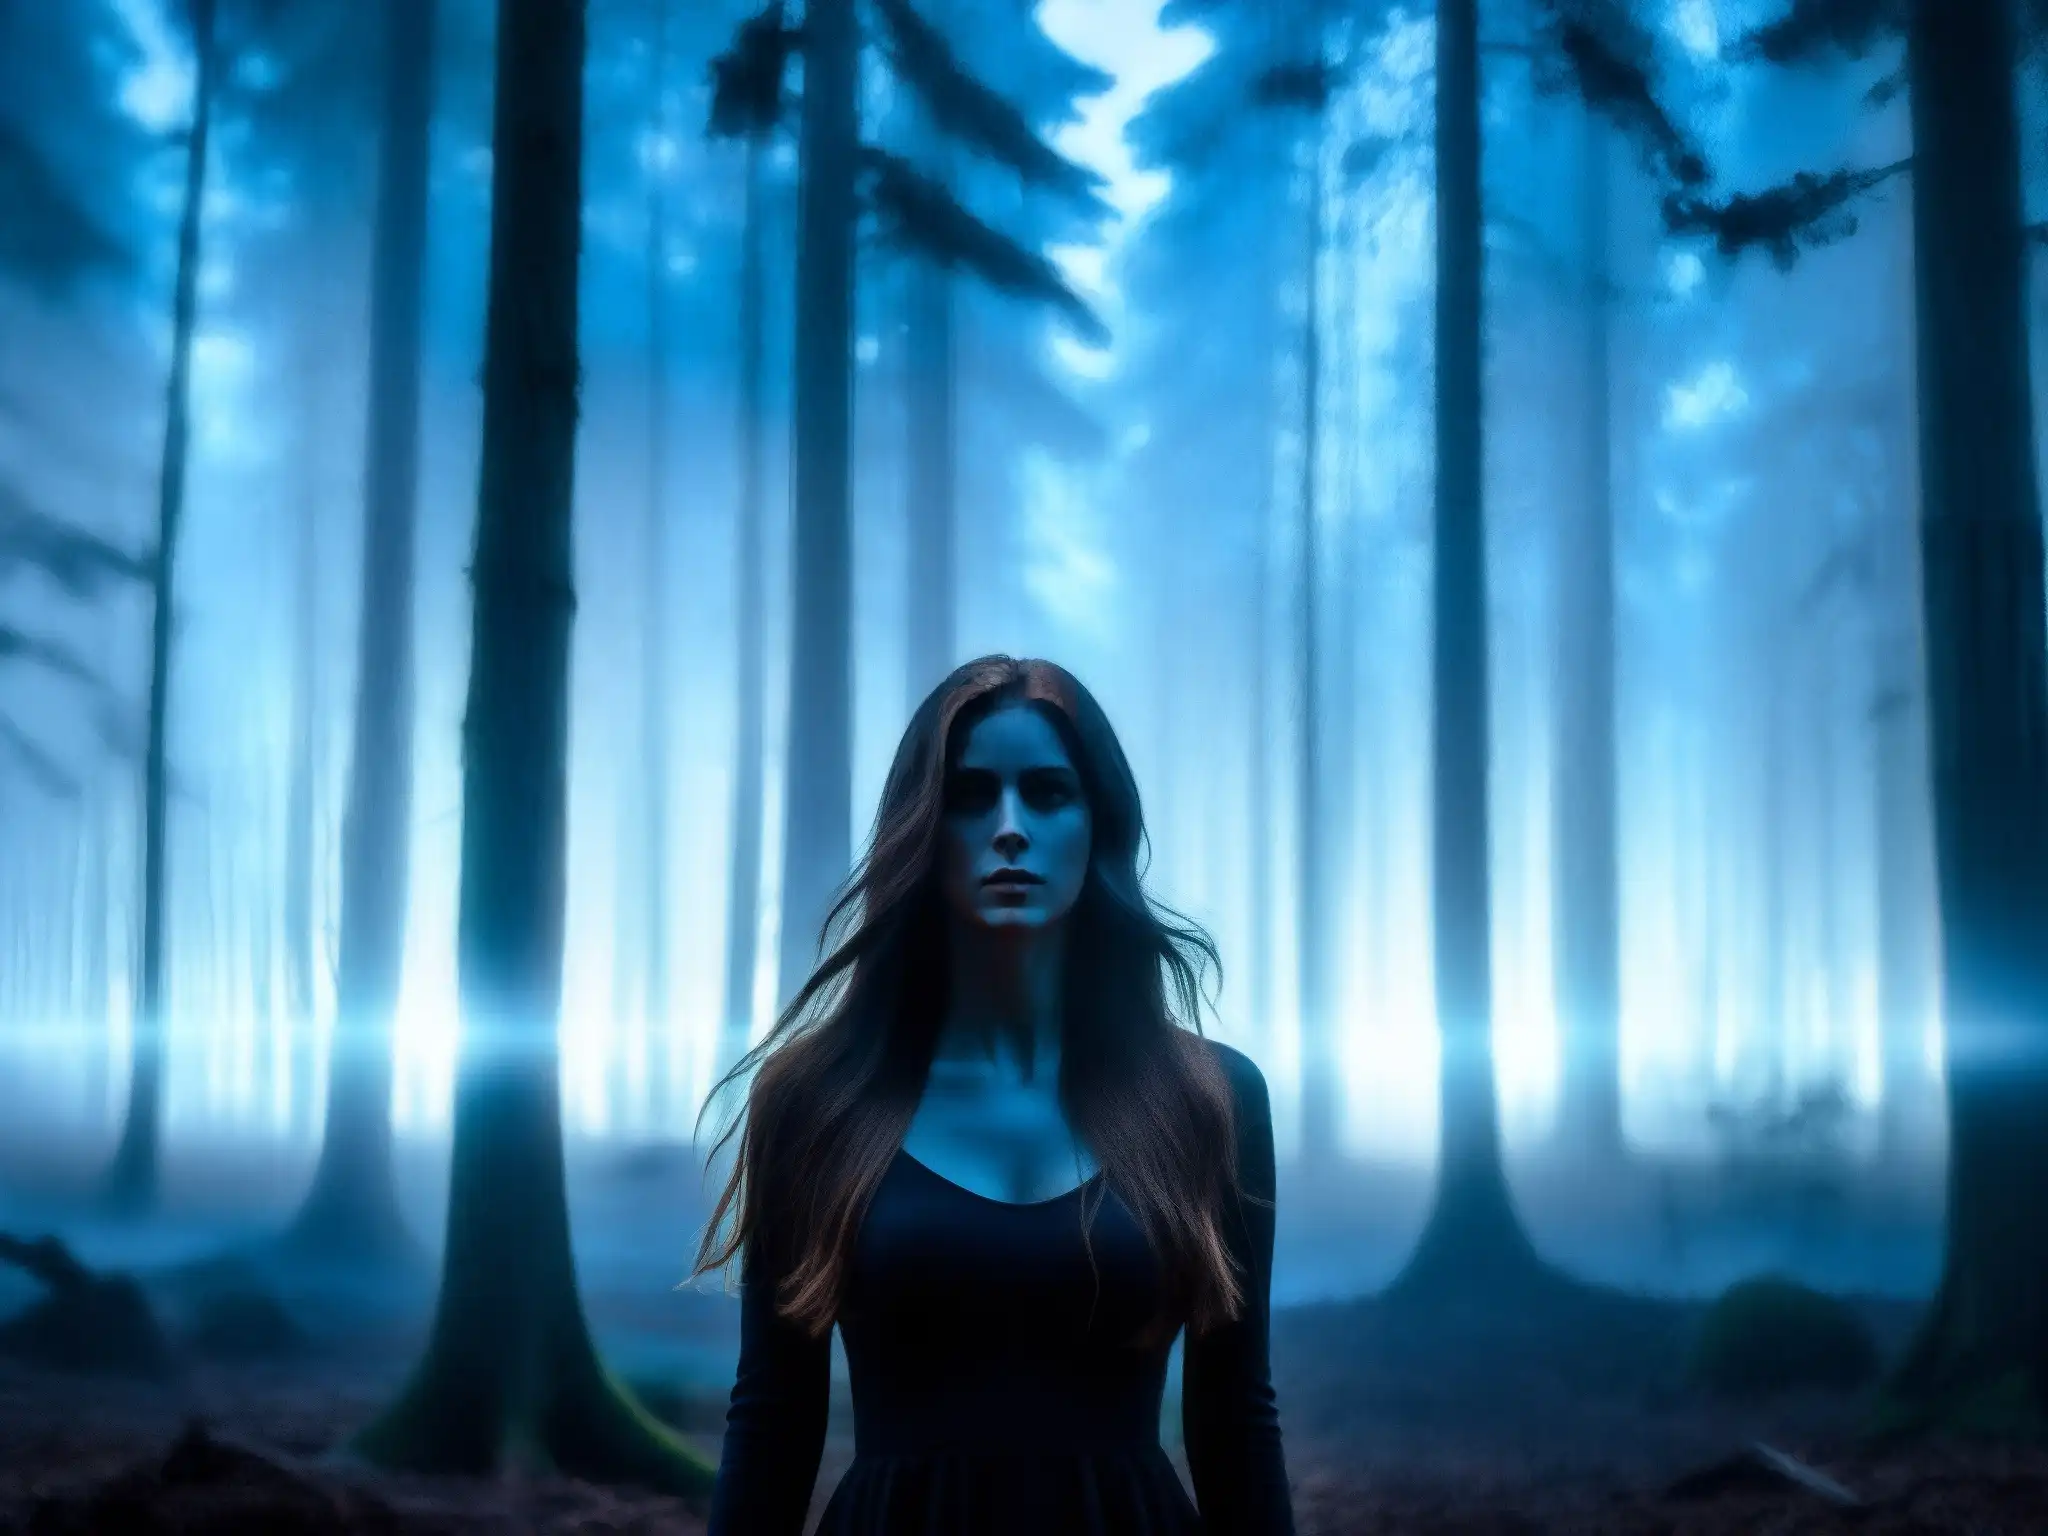 Enigmática La Cegua, mito centroamericano, emerge de la neblina nocturna en un bosque oscuro, con ojos azules brillantes